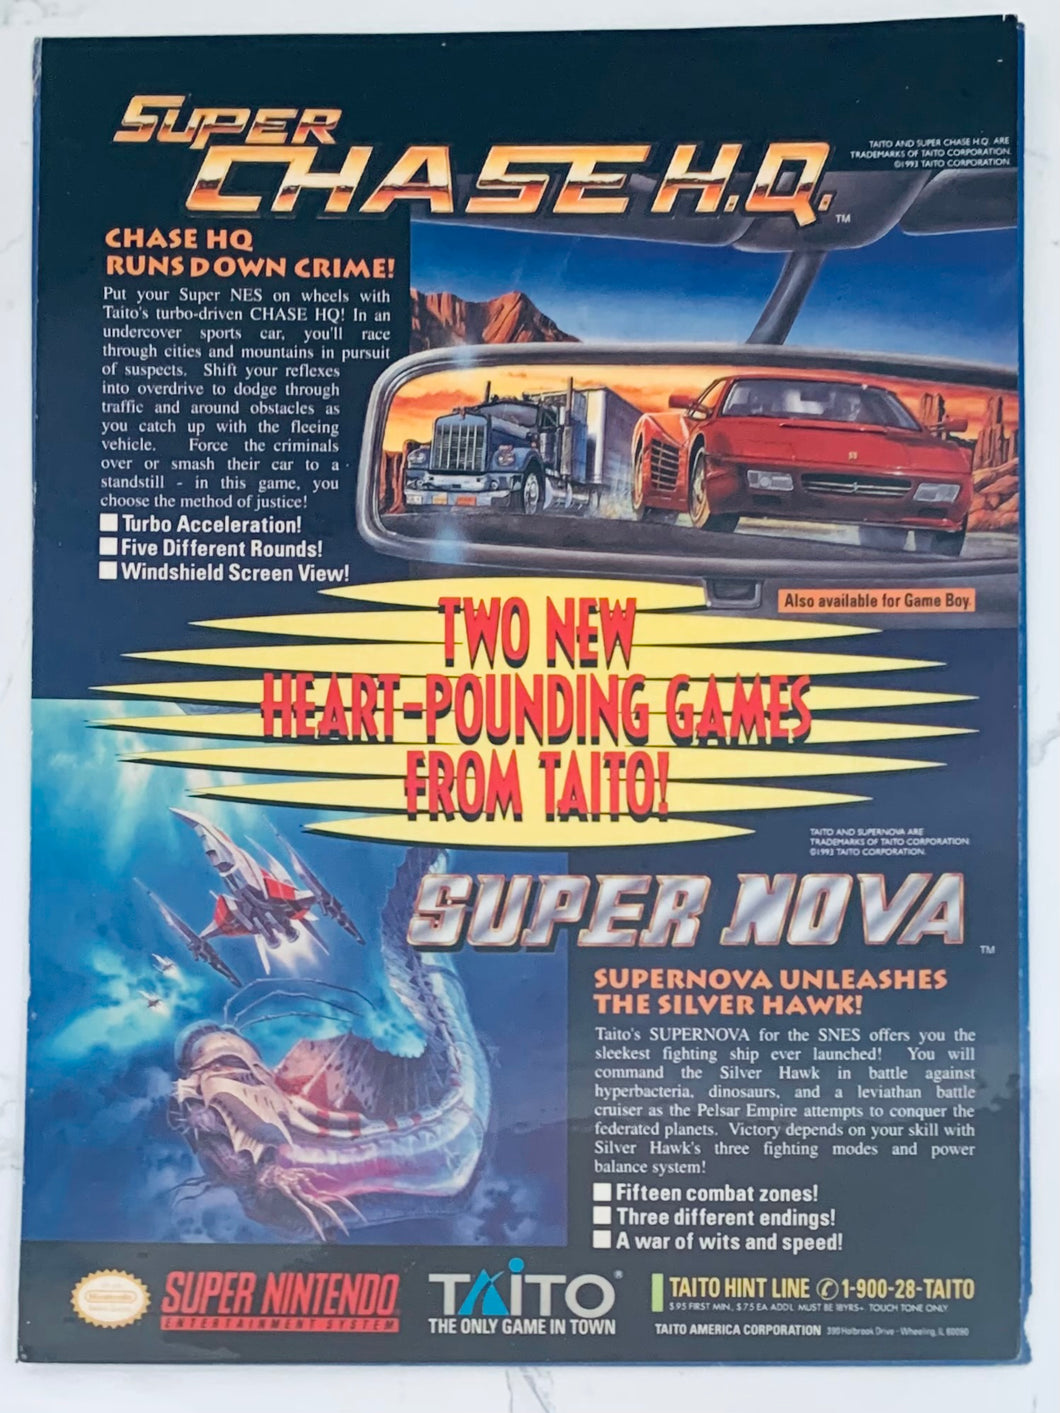 Super Chase H.Q. / Super Nova - SNES - Original Vintage Advertisement - Print Ads - Laminated A4 Poster